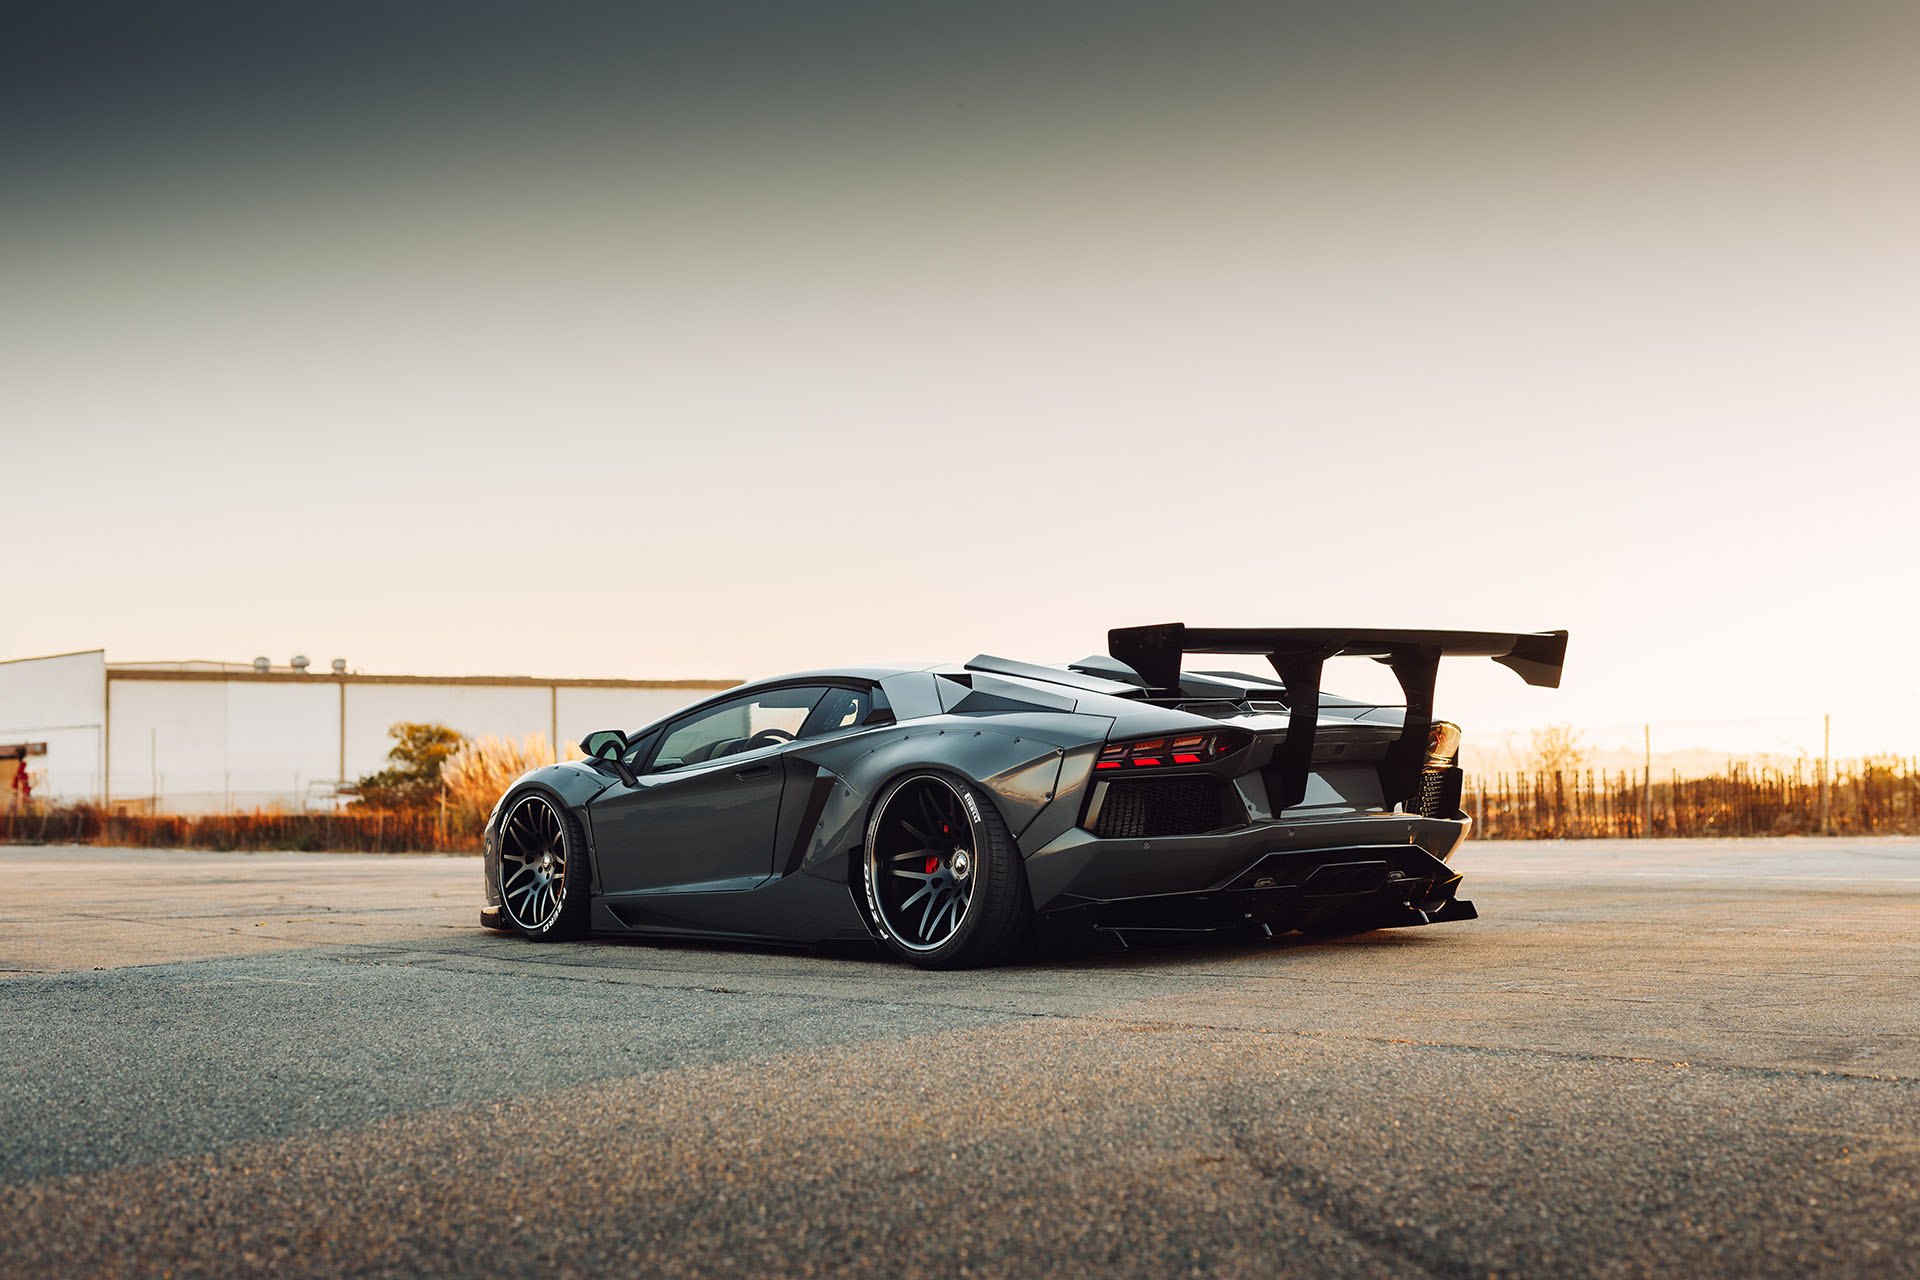 Large Wing Spoiler on Black Lamborghini Aventador - Photo by Forgiato